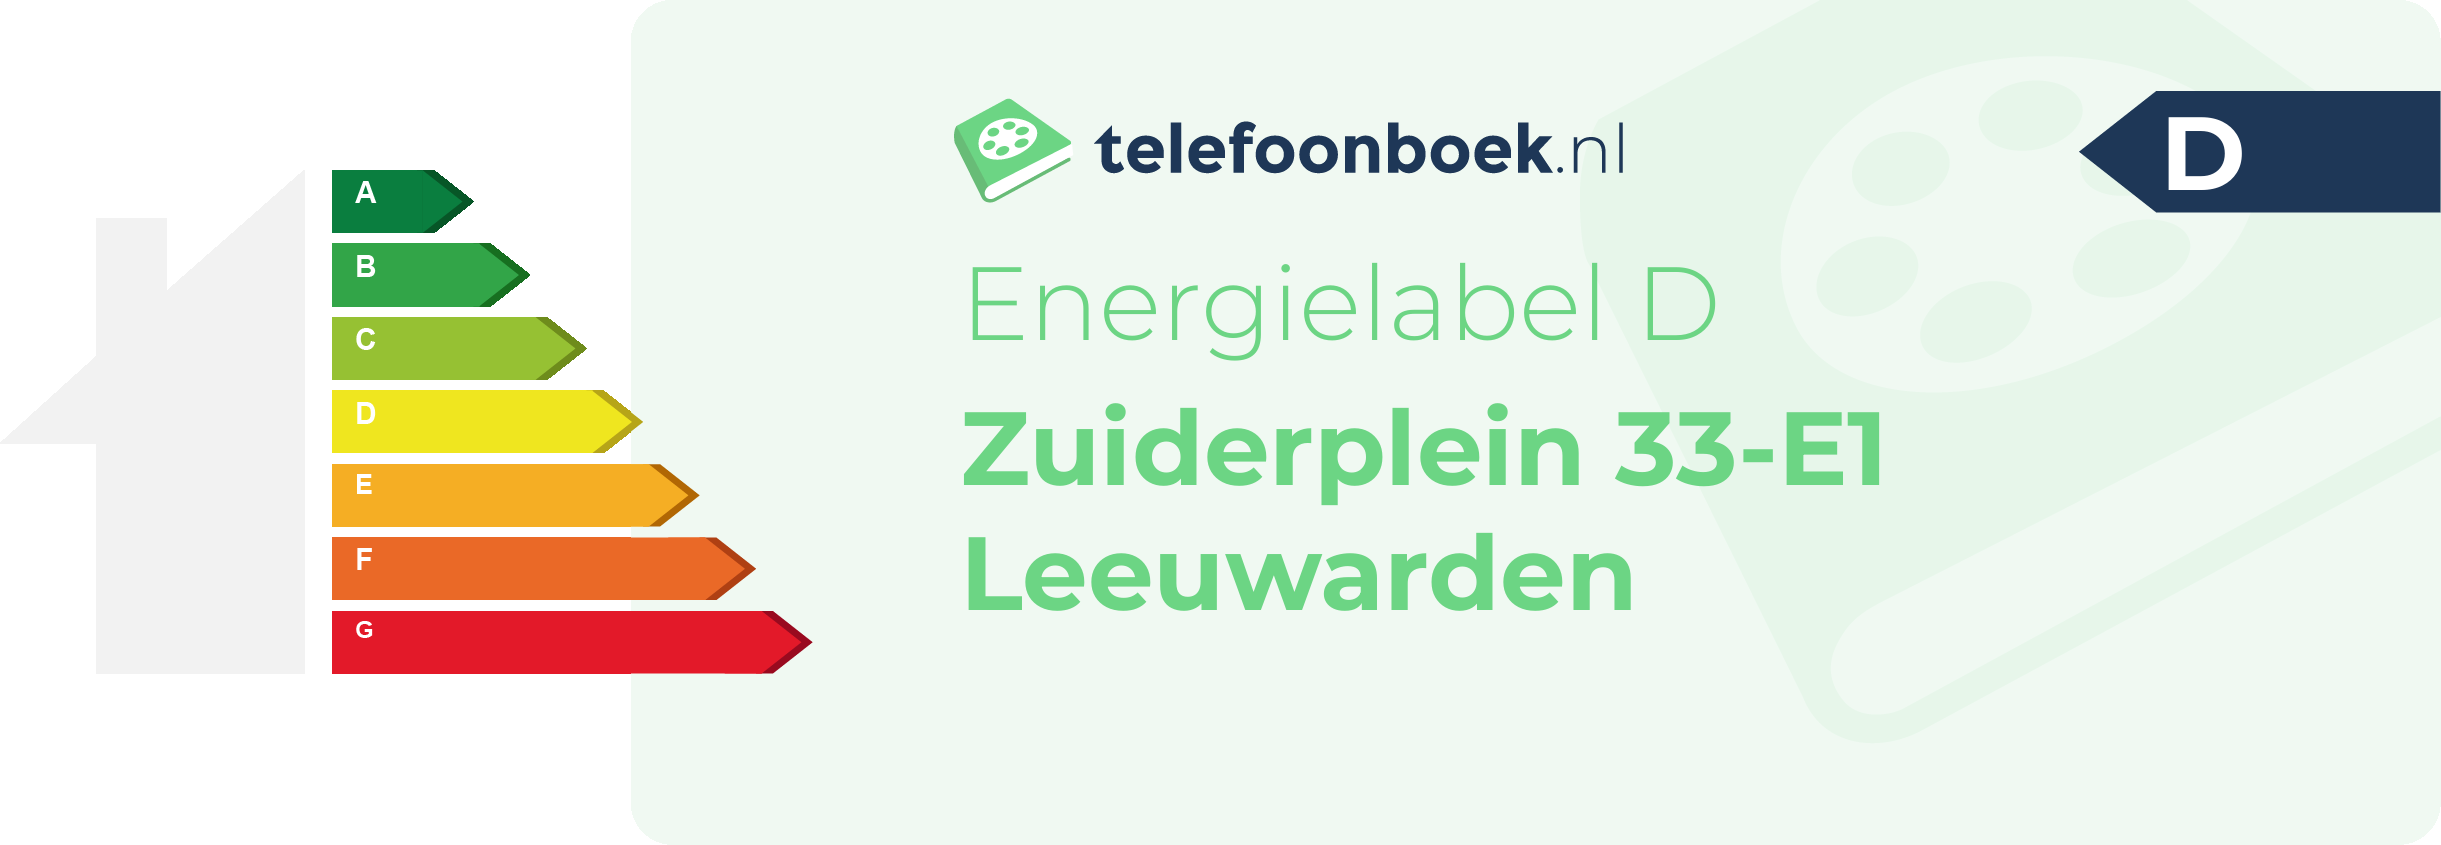 Energielabel Zuiderplein 33-E1 Leeuwarden